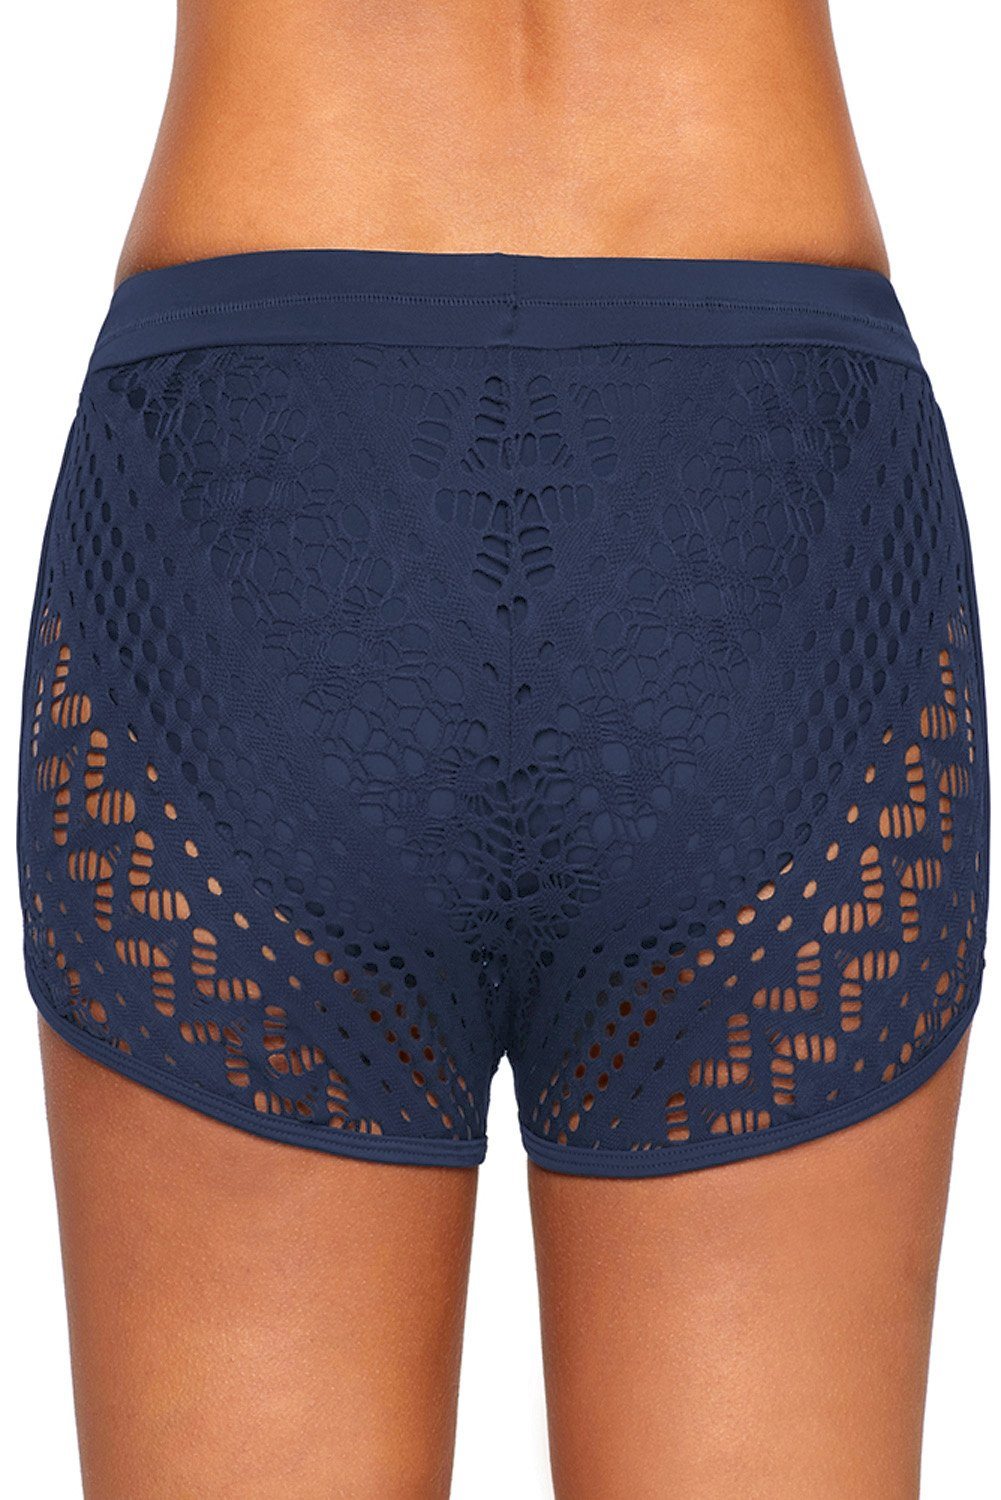 Women Navy Blue Slim Fitted Wide Waistband Low Rise Crochet Swim Shorts Trunks Bottoms - KaleaBoutique.com